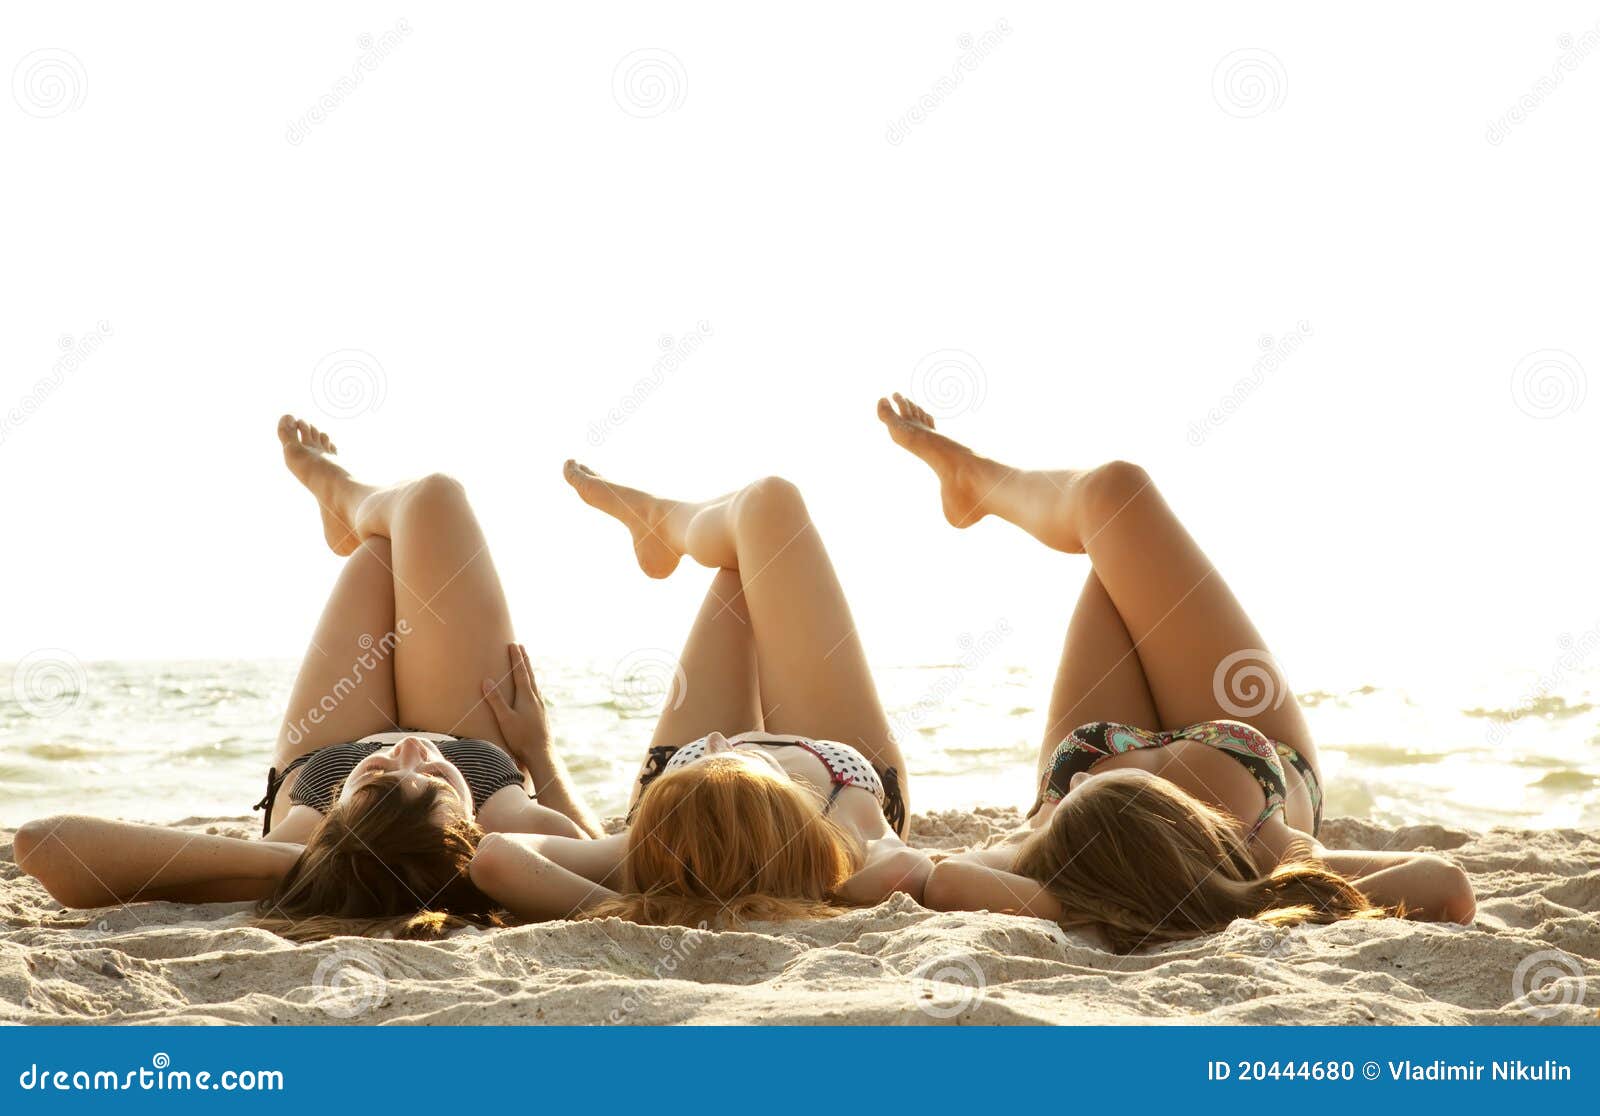 198,128 Beach Bikini Stock Photos